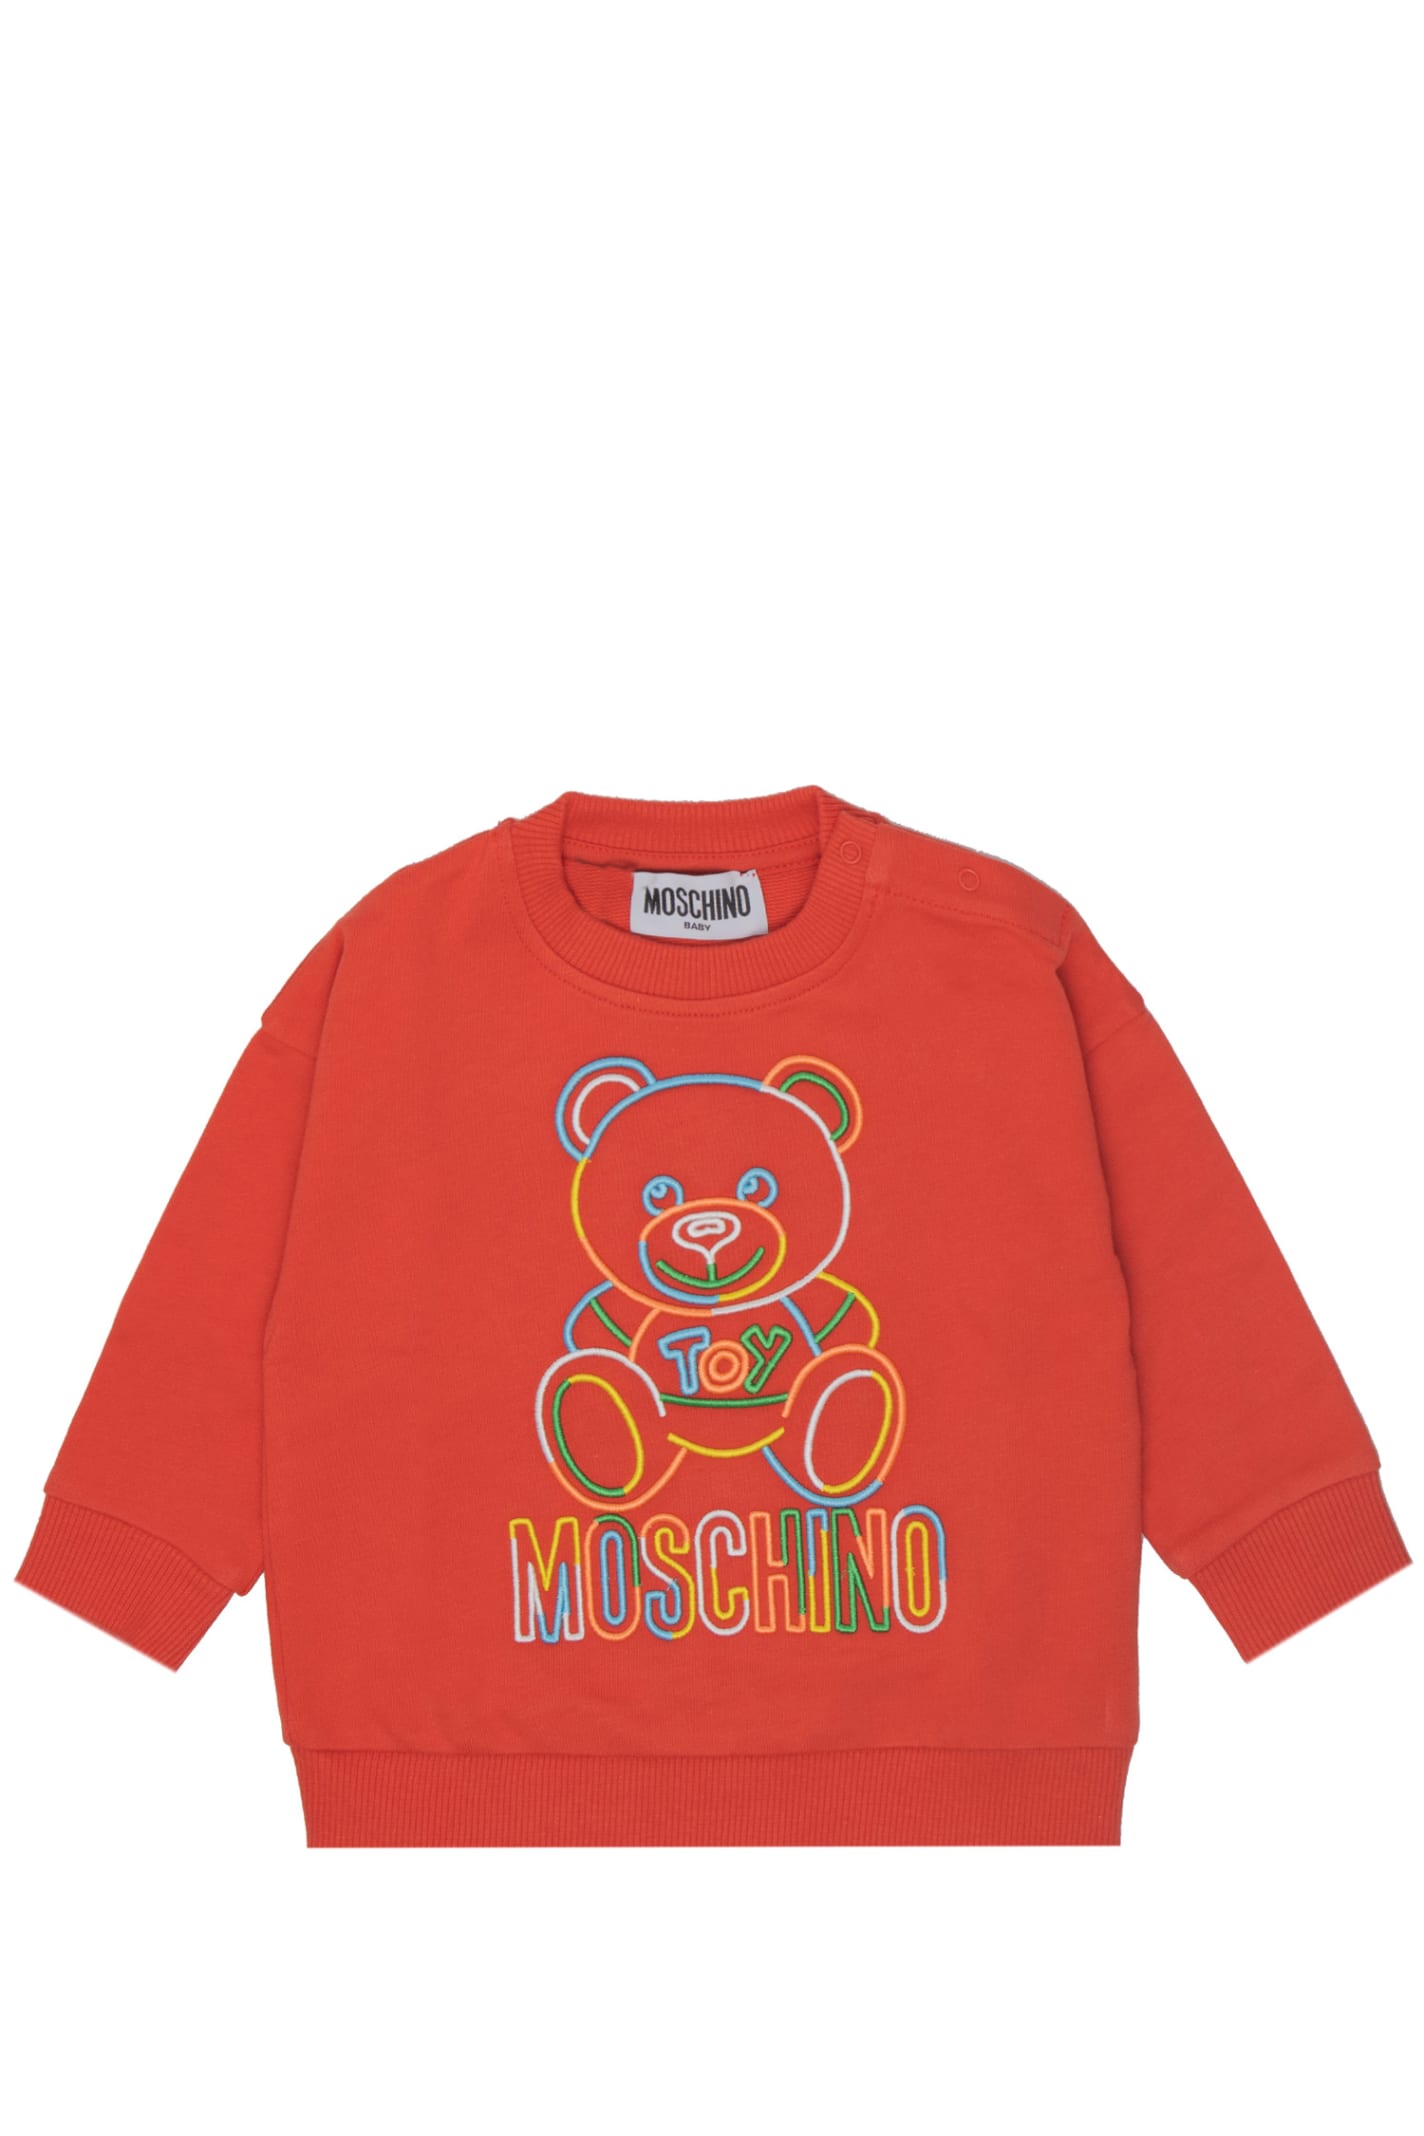 Moschino Cotton Sweatshirt With Print